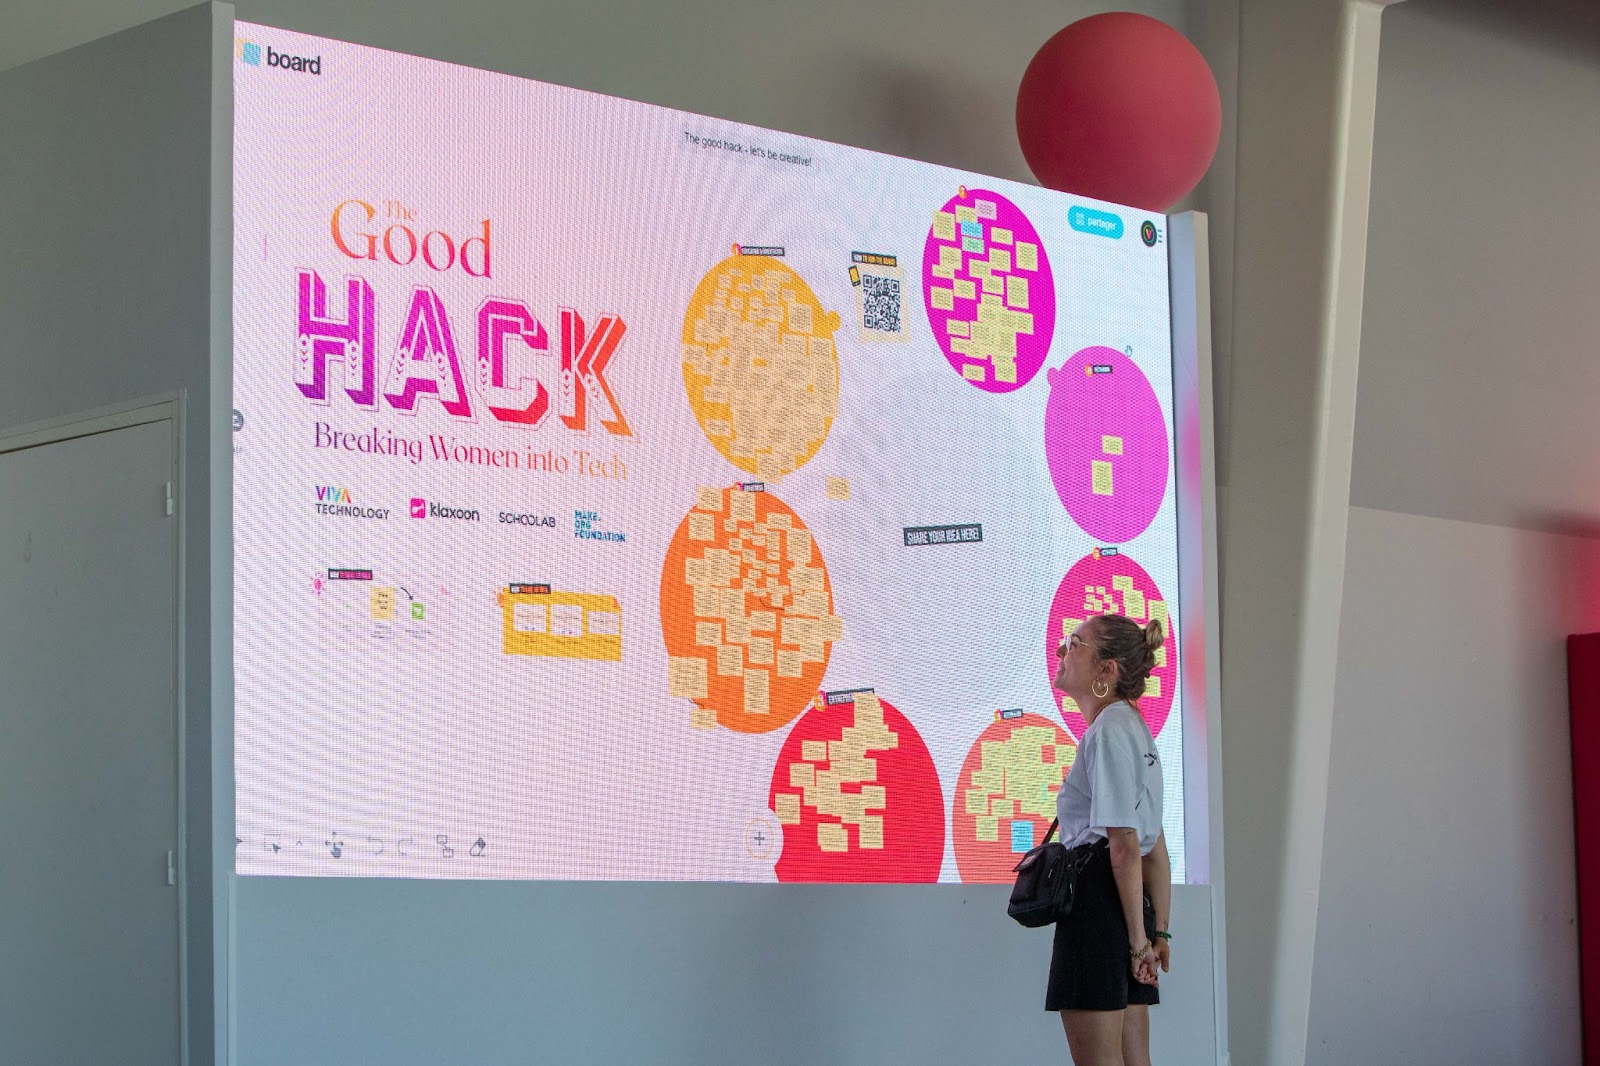 The good hack idea board